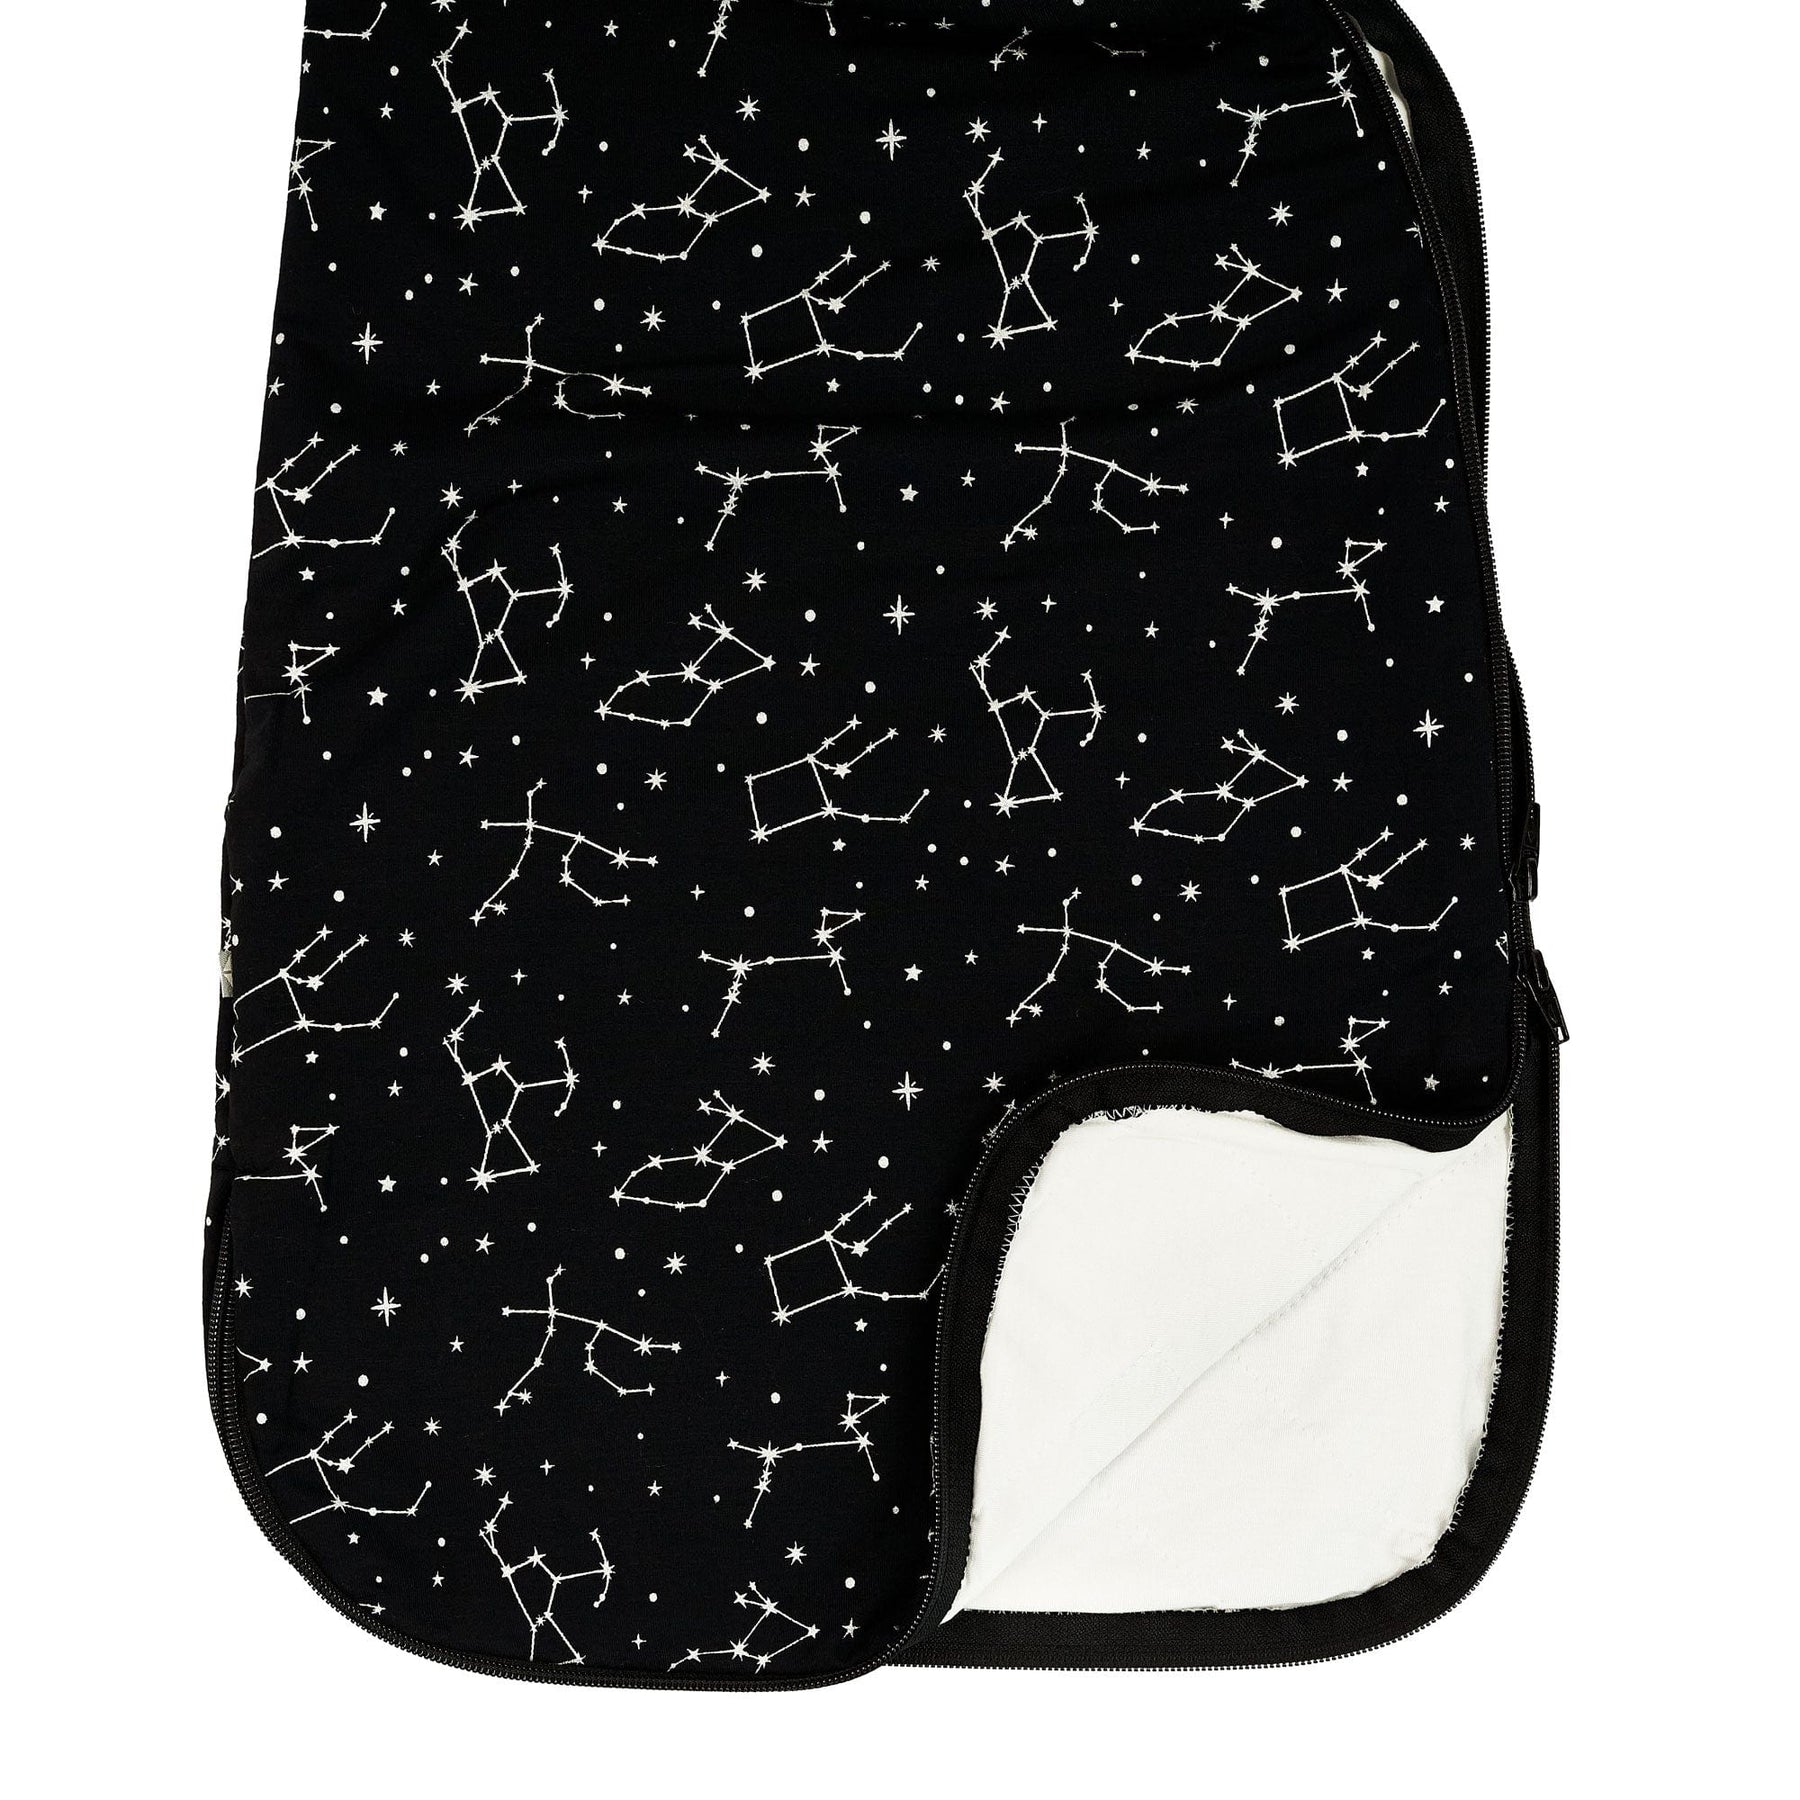 Kyte BABY Sleep Bag 1.0 Tog Sleep Bag in Midnight Constellations 1.0